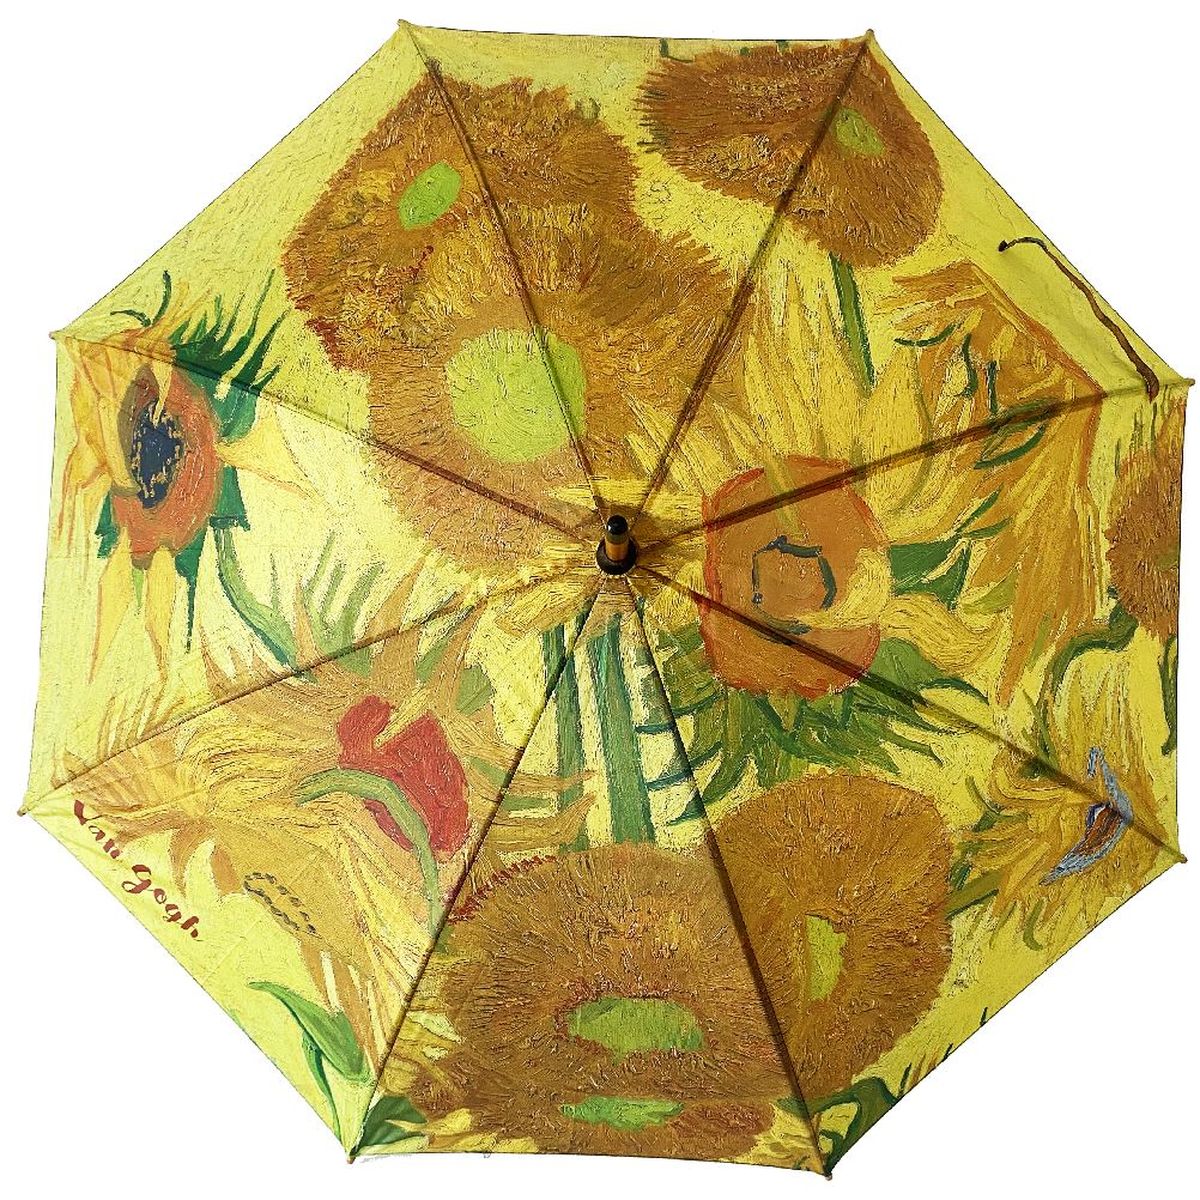 Large Van Gogh Umbrella